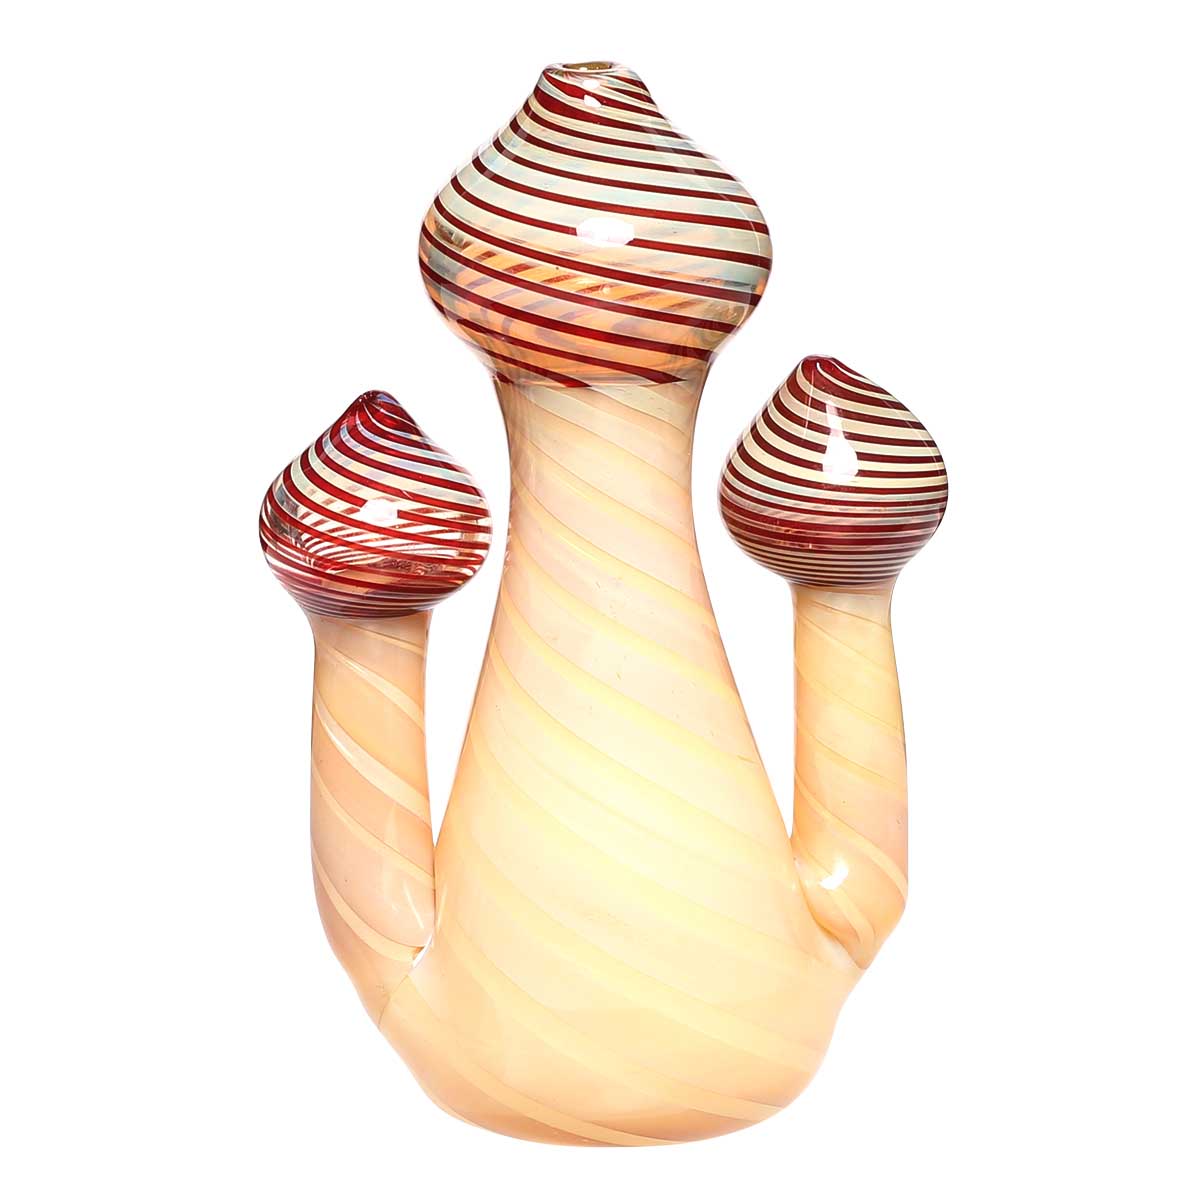 4 Mushroom Hand Pipe Pipes